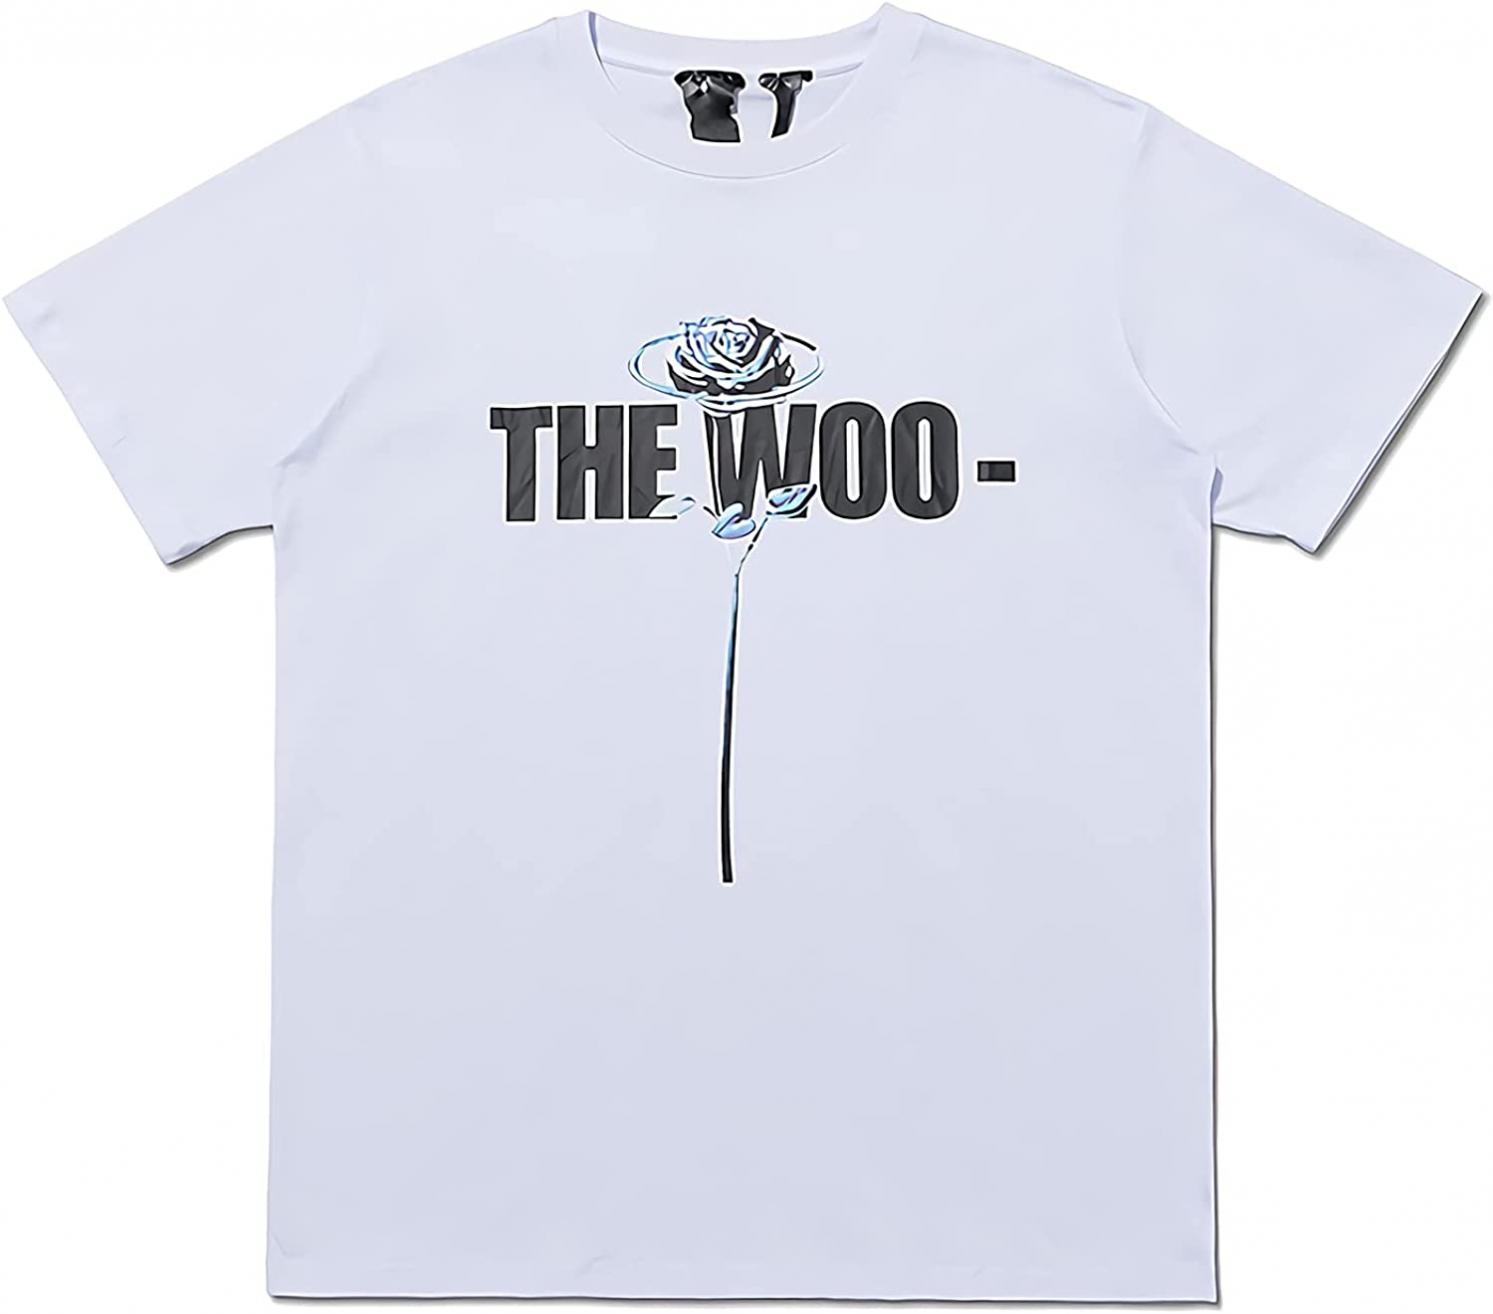 c-cor V Shirt The Woo Rose Print Big V Short-Sleeve T-Shirt Hip Hop Trend Tee for Men Women Youth